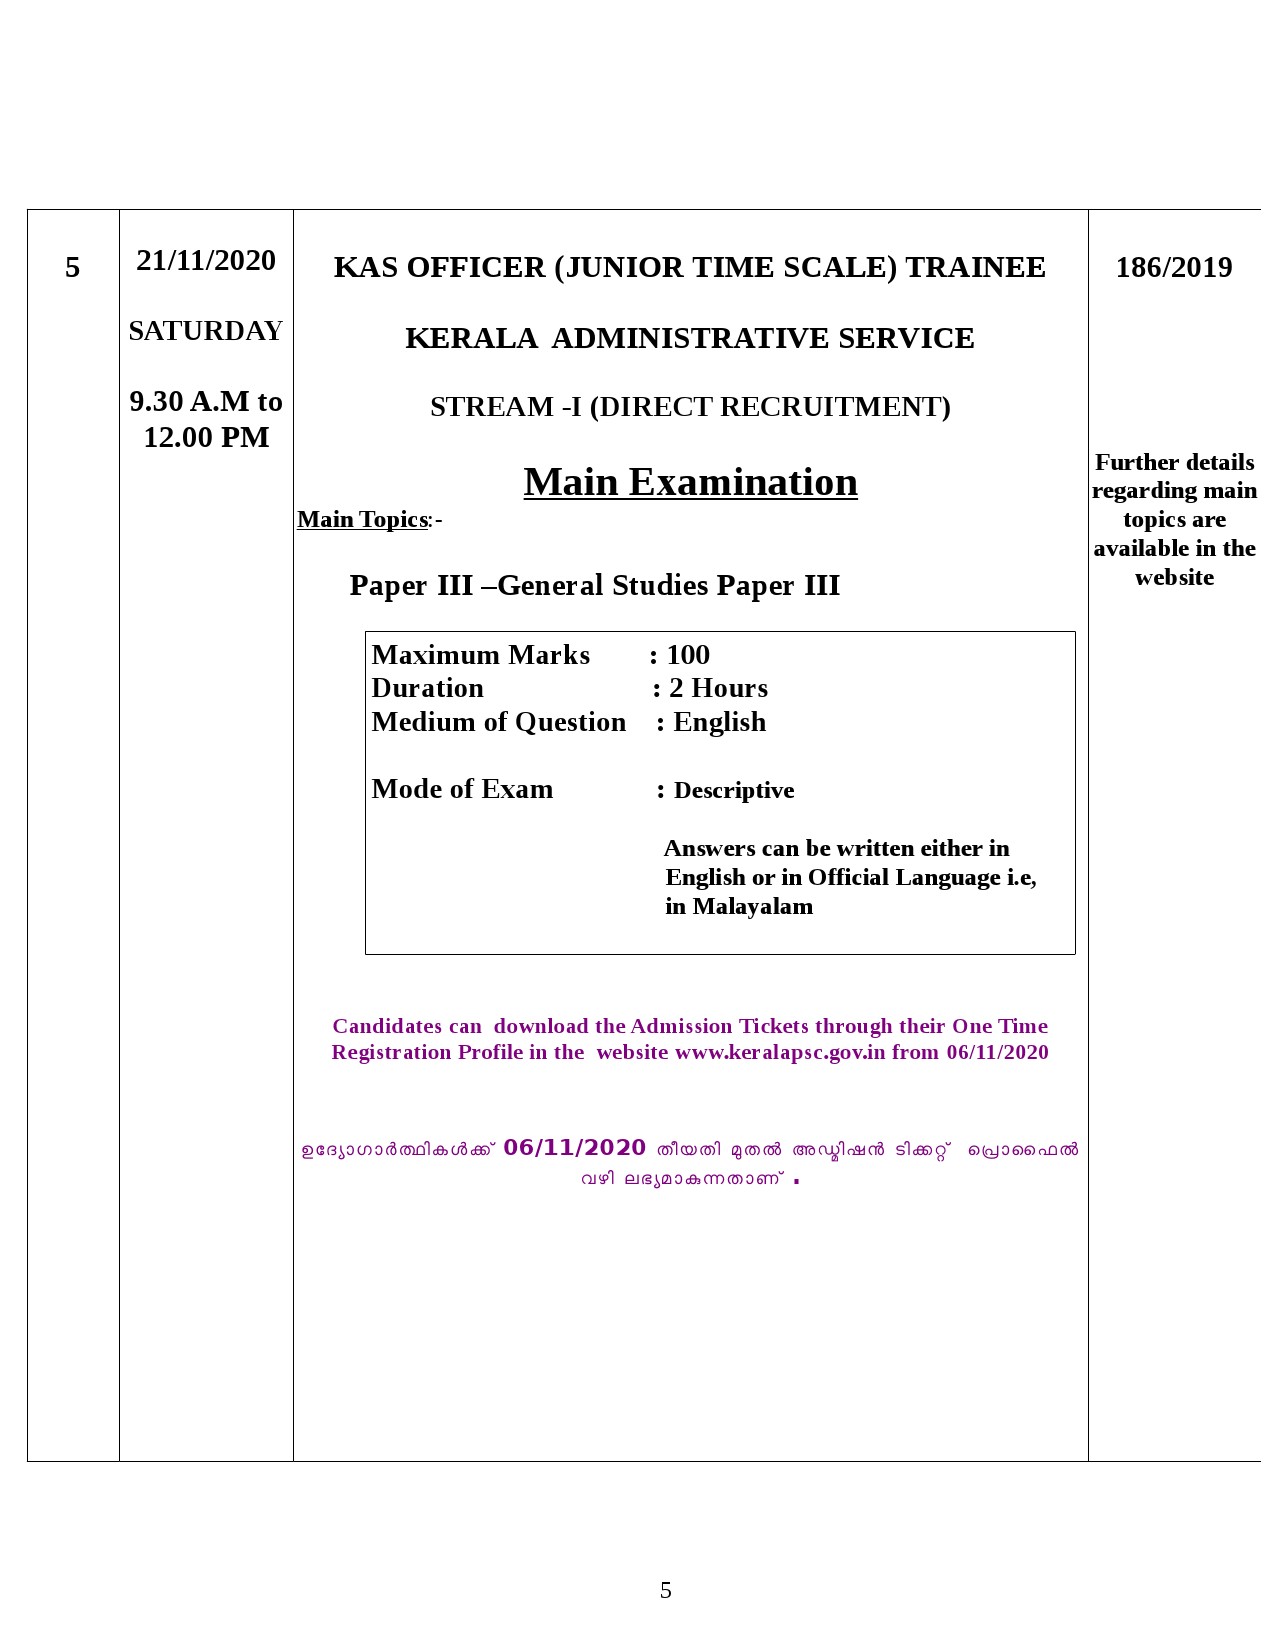 Kerala PSC Additional Exam for November 2020 - Notification Image 5